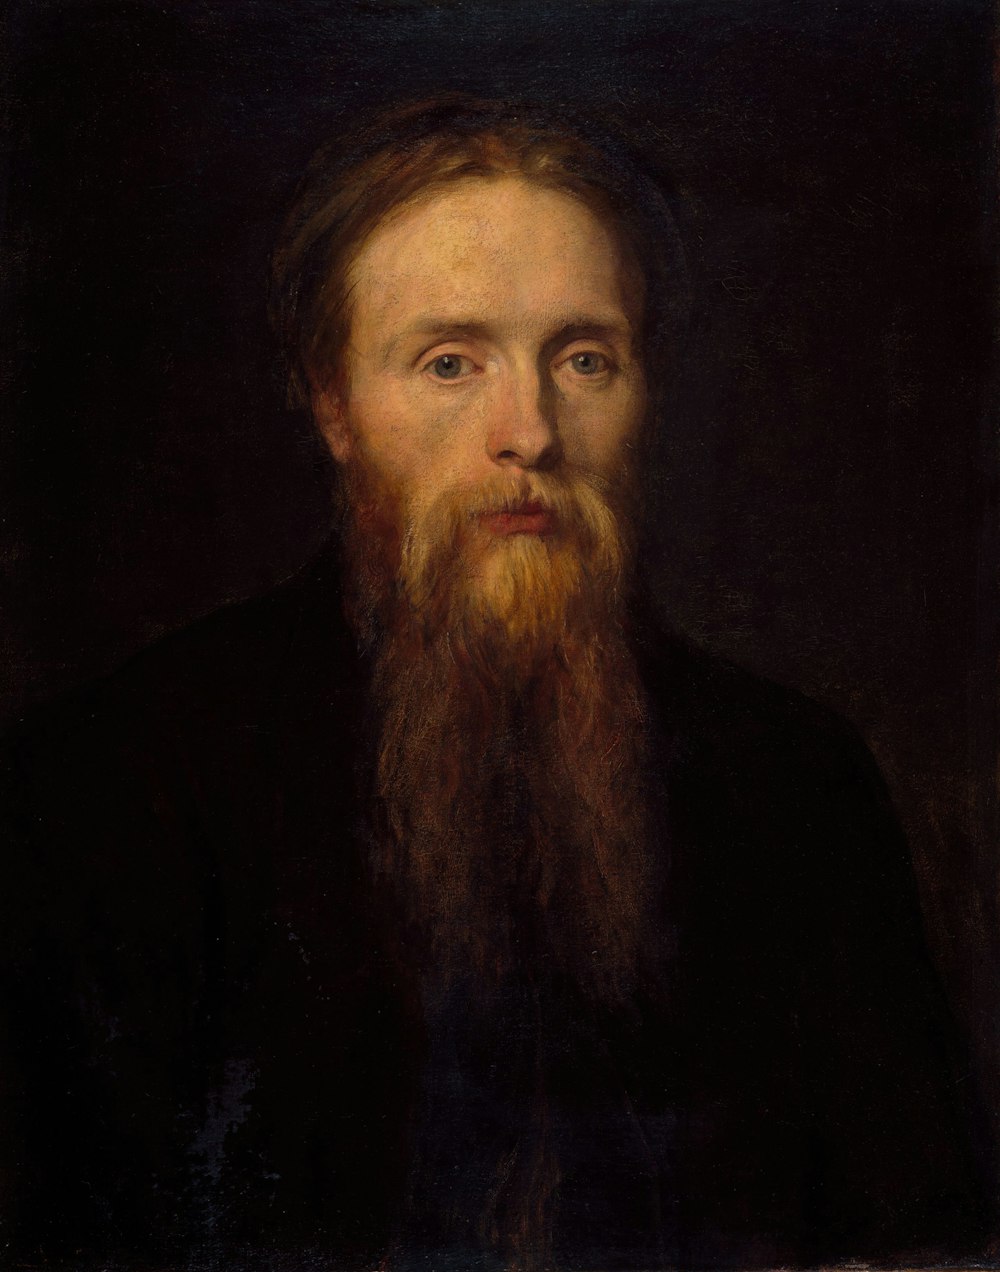 retrato do homem de barba comprida